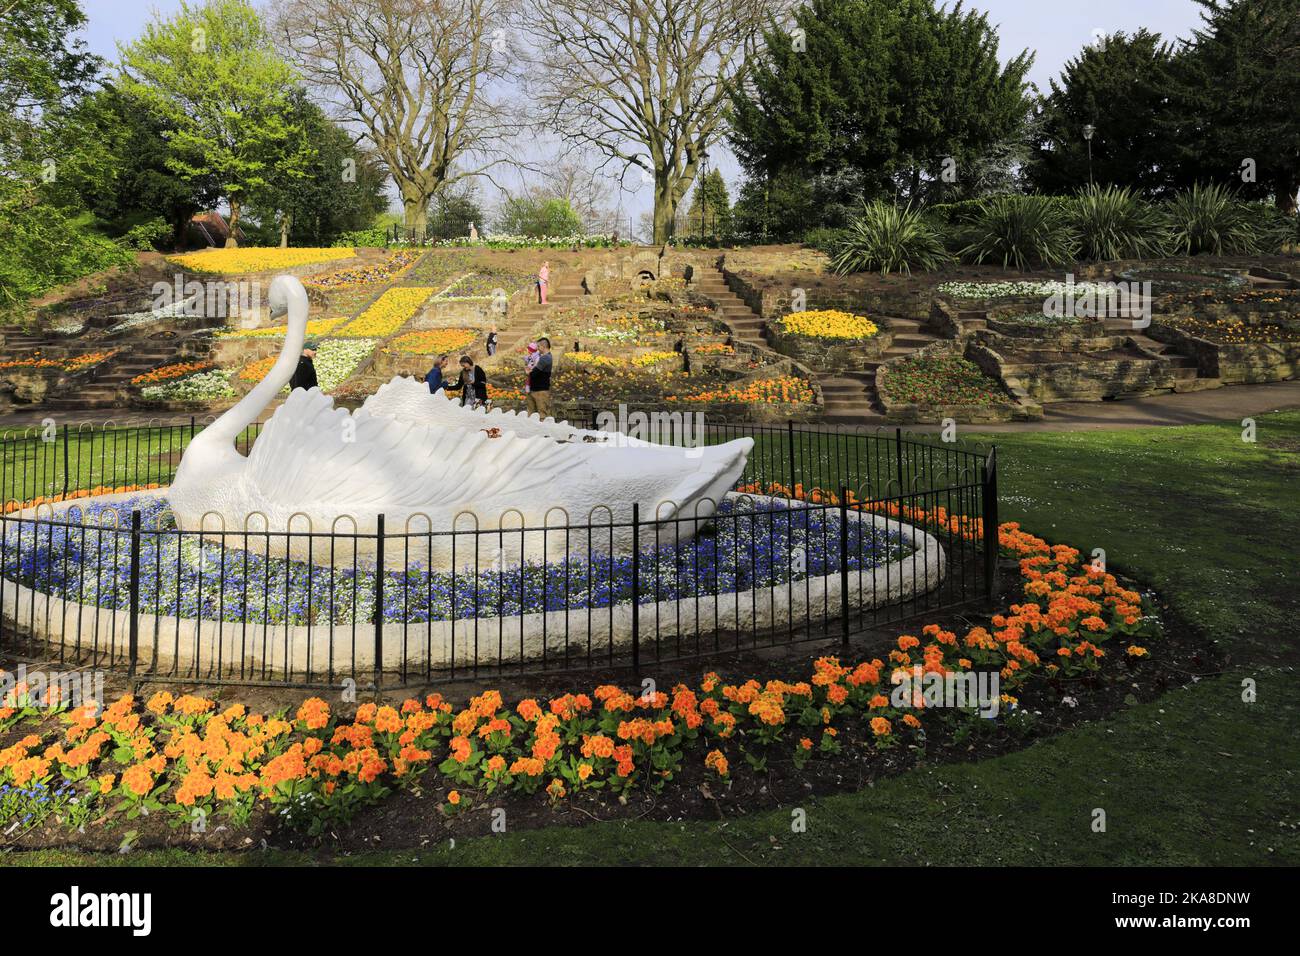 Flower displays in Stapenhill Gardens, Burton-on-Trent town, Staffordshire, England; UK Stock Photo